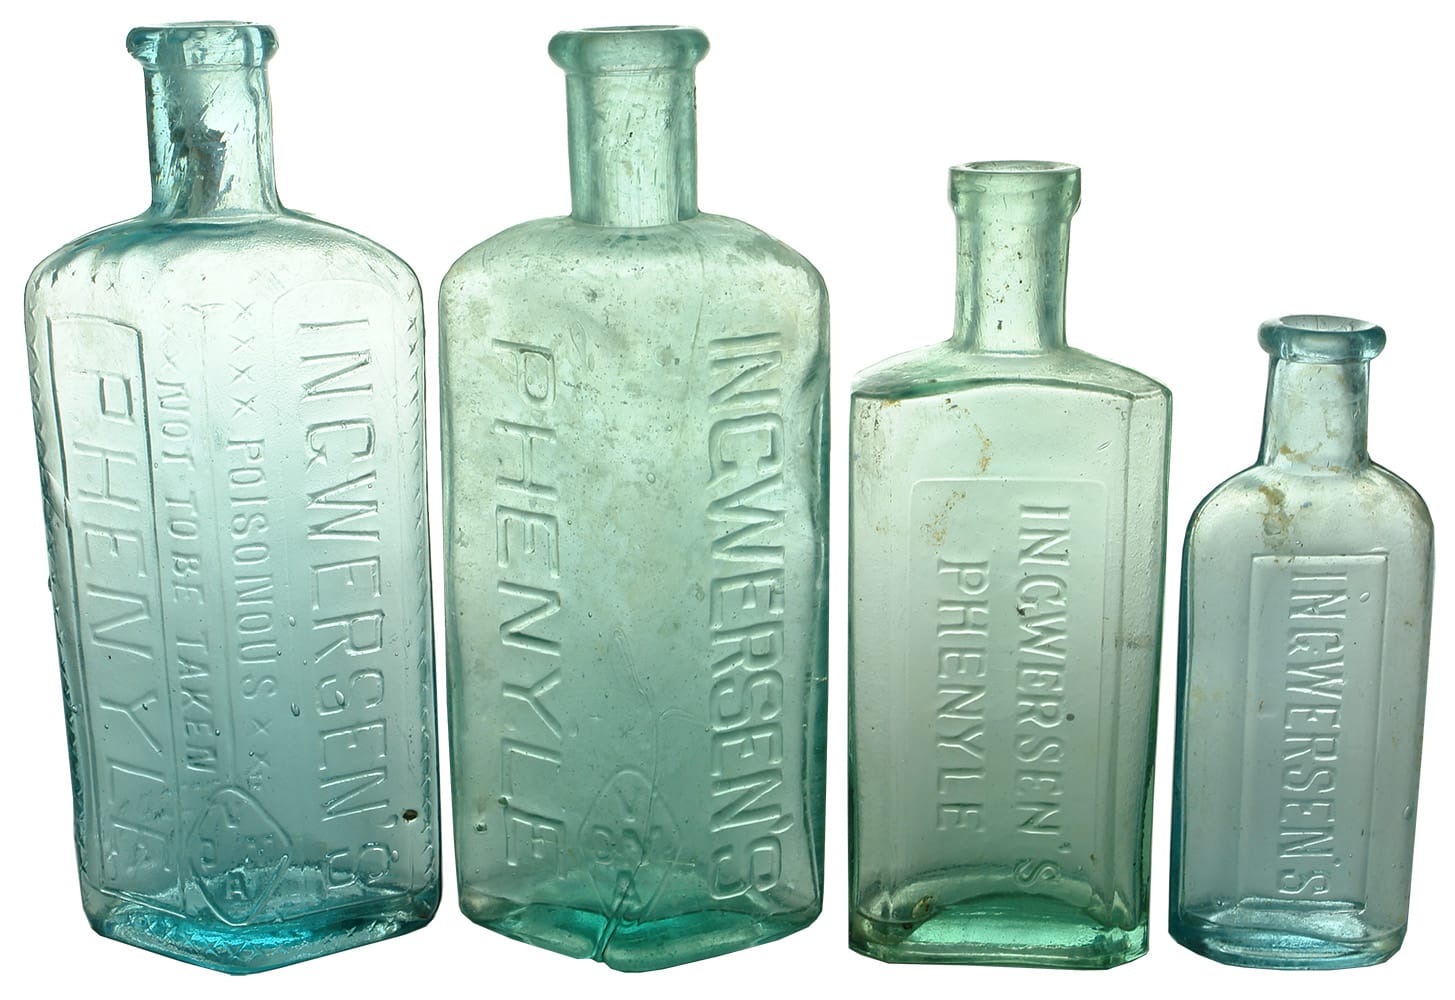 Ingwersen's Phenyle Poison Bottles